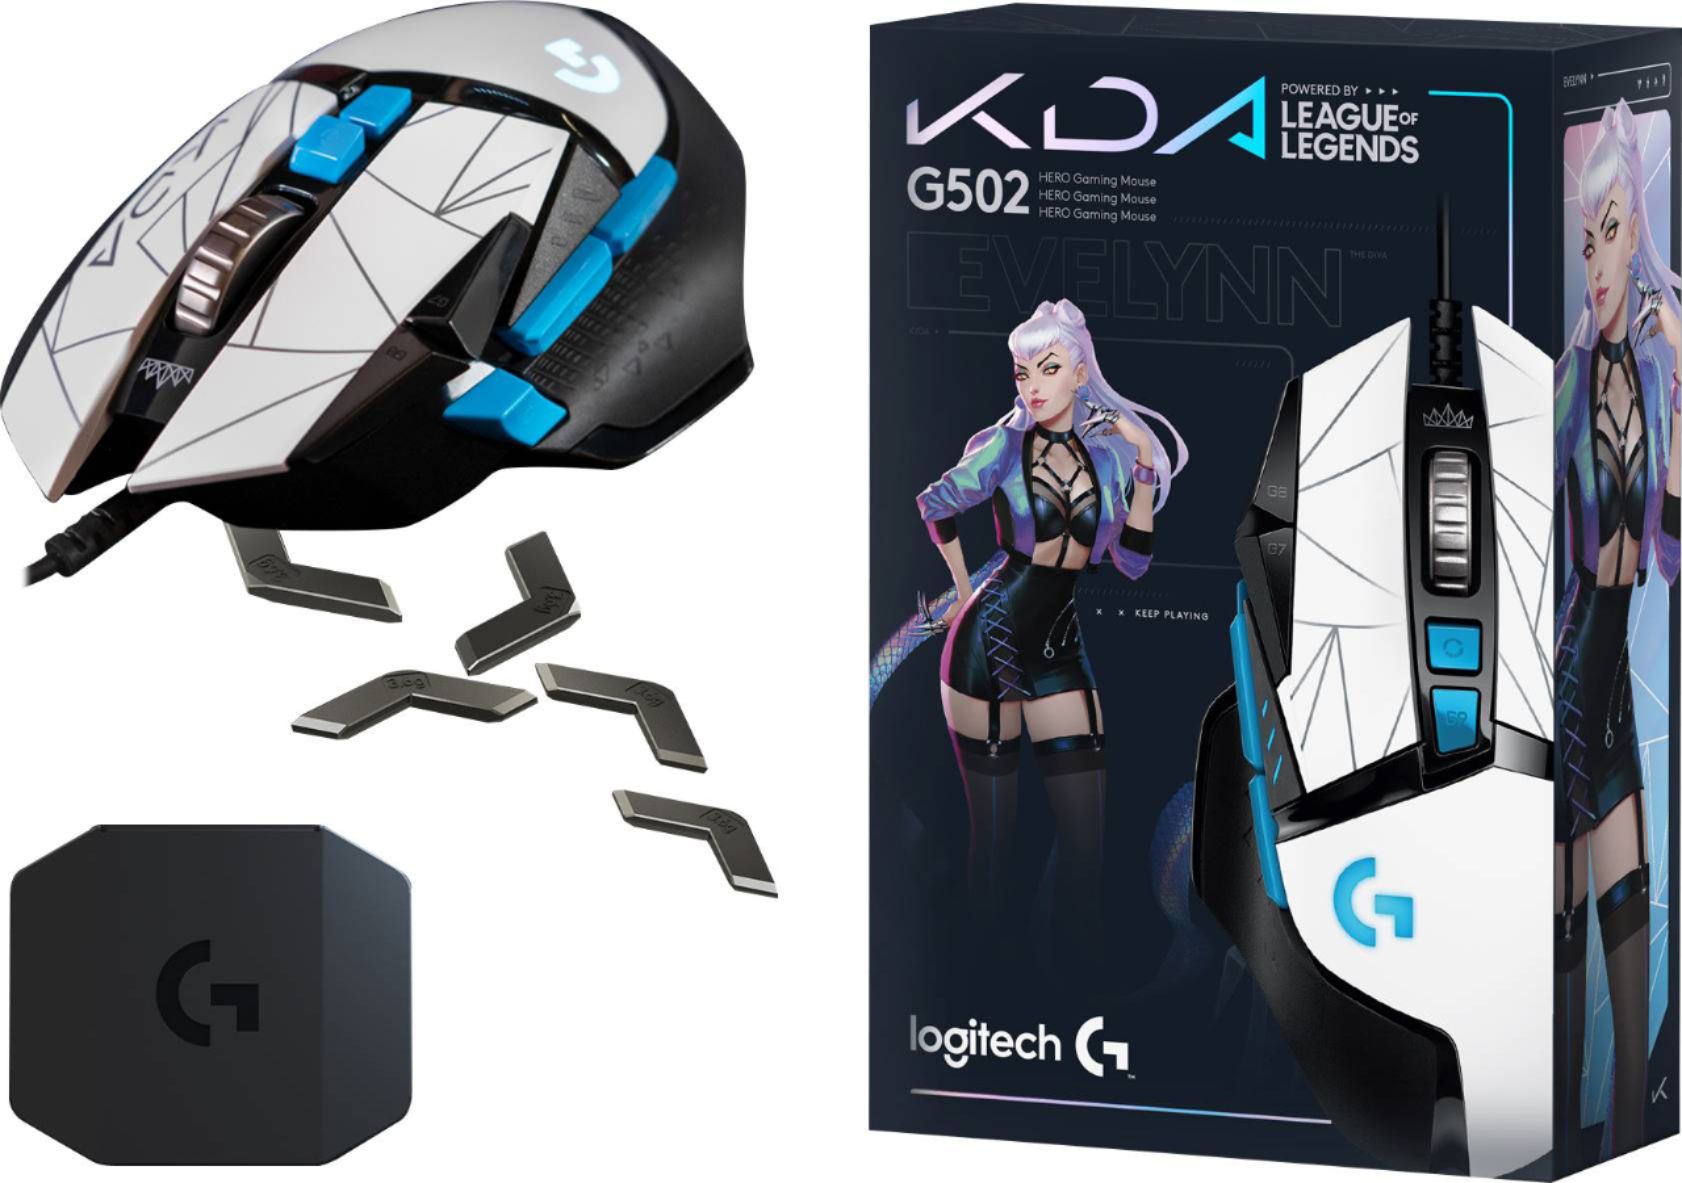  Logitech G502 Hero K/DA High Performance Gaming Mouse - Hero  25K Sensor, 16.8 Million Color LIGHTSYNC RGB, 11 Programmable Buttons,  On-Board Memory - Official League of Legends KDA Gaming Gear 